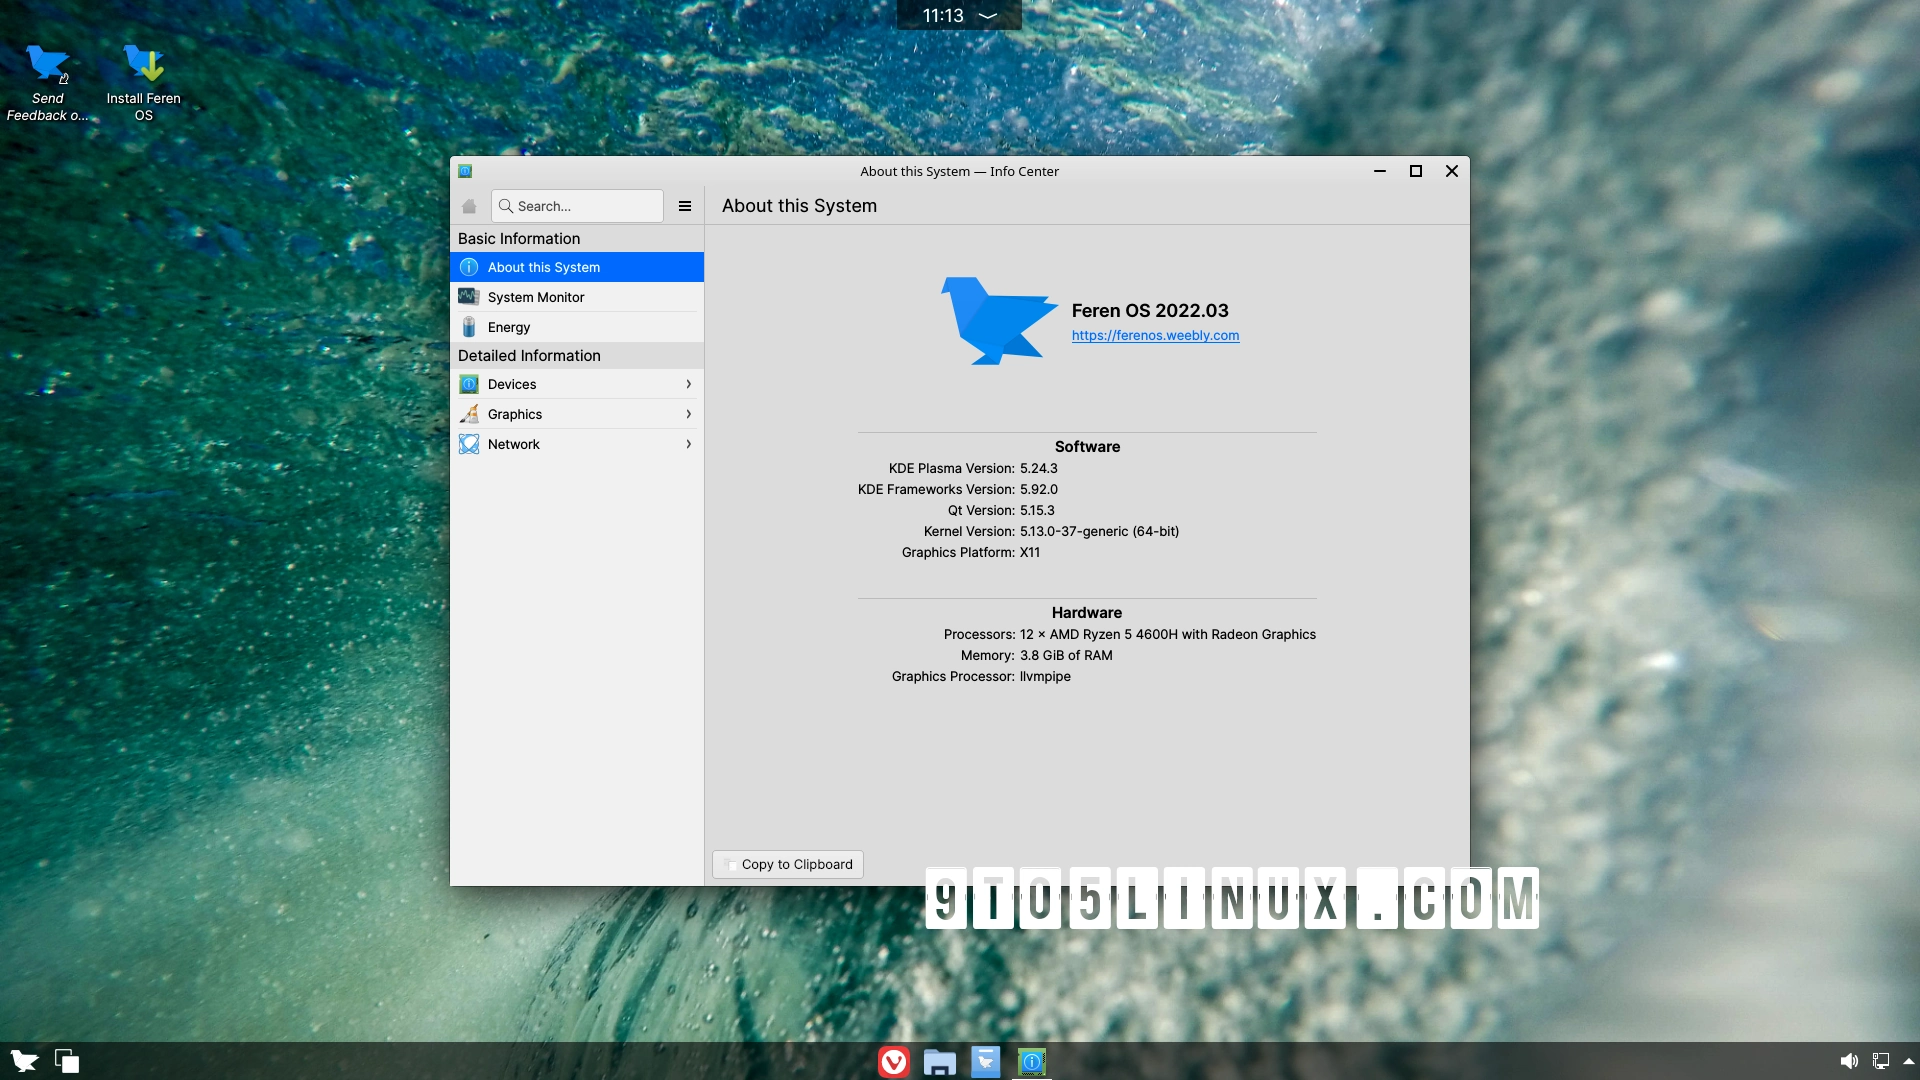 Ubuntu-Based Feren OS 2022.03 Released with KDE Plasma 5.24 LTS, Various Improvements